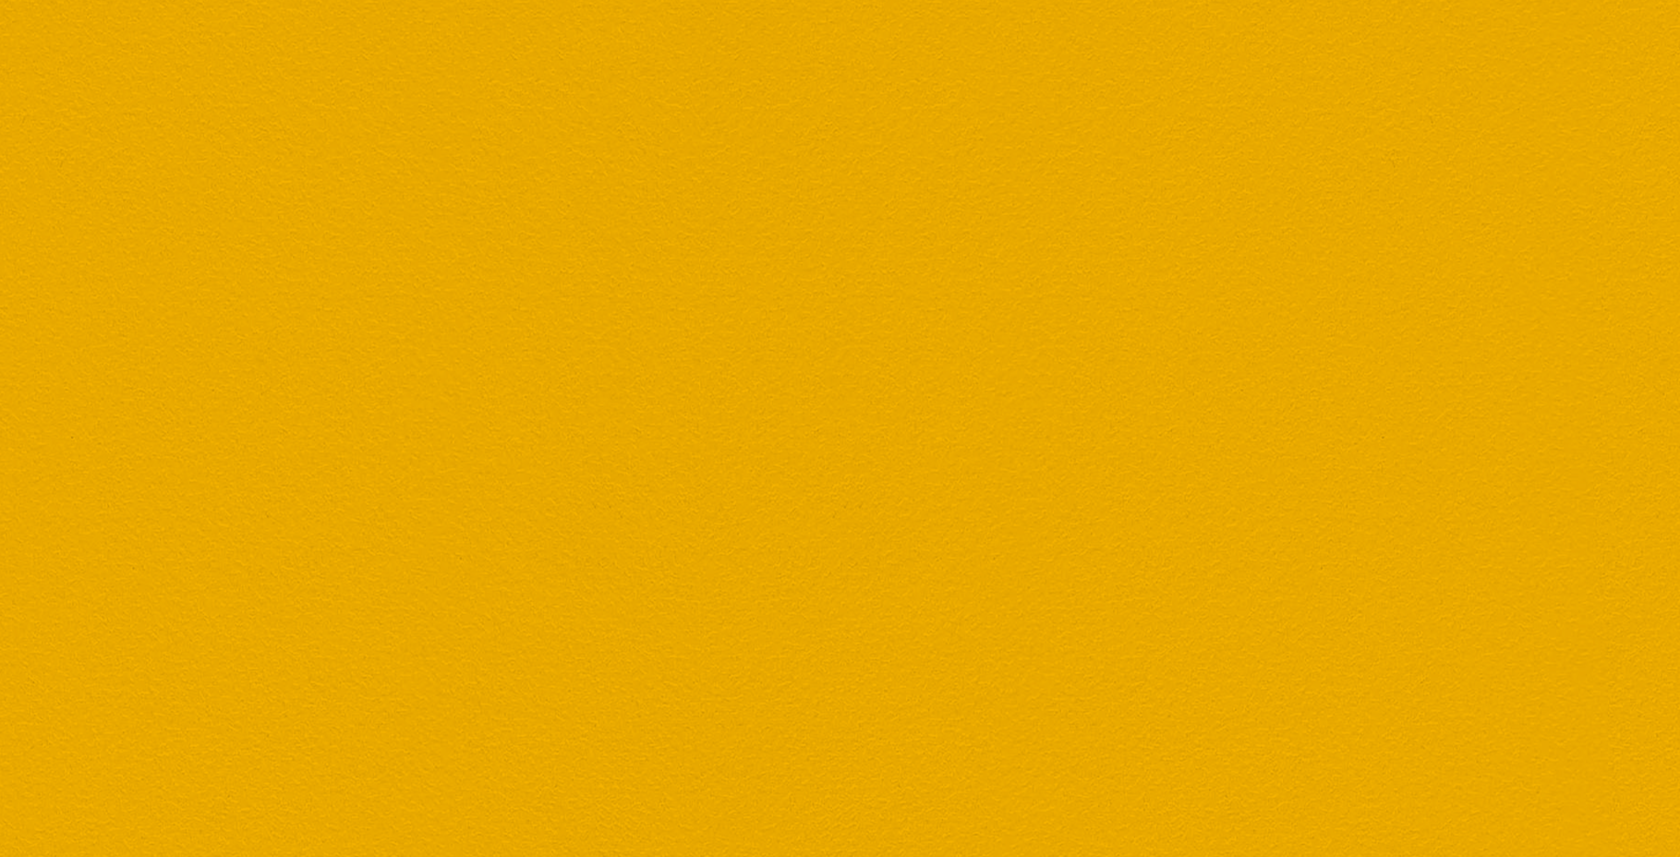 26 50 08. Oracal Brimstone Yellow (жёлтая глянцевая) 641-025g,. Грязно желтый цвет. Тёмно жёлтый цвет. Горчичный цвет фон.